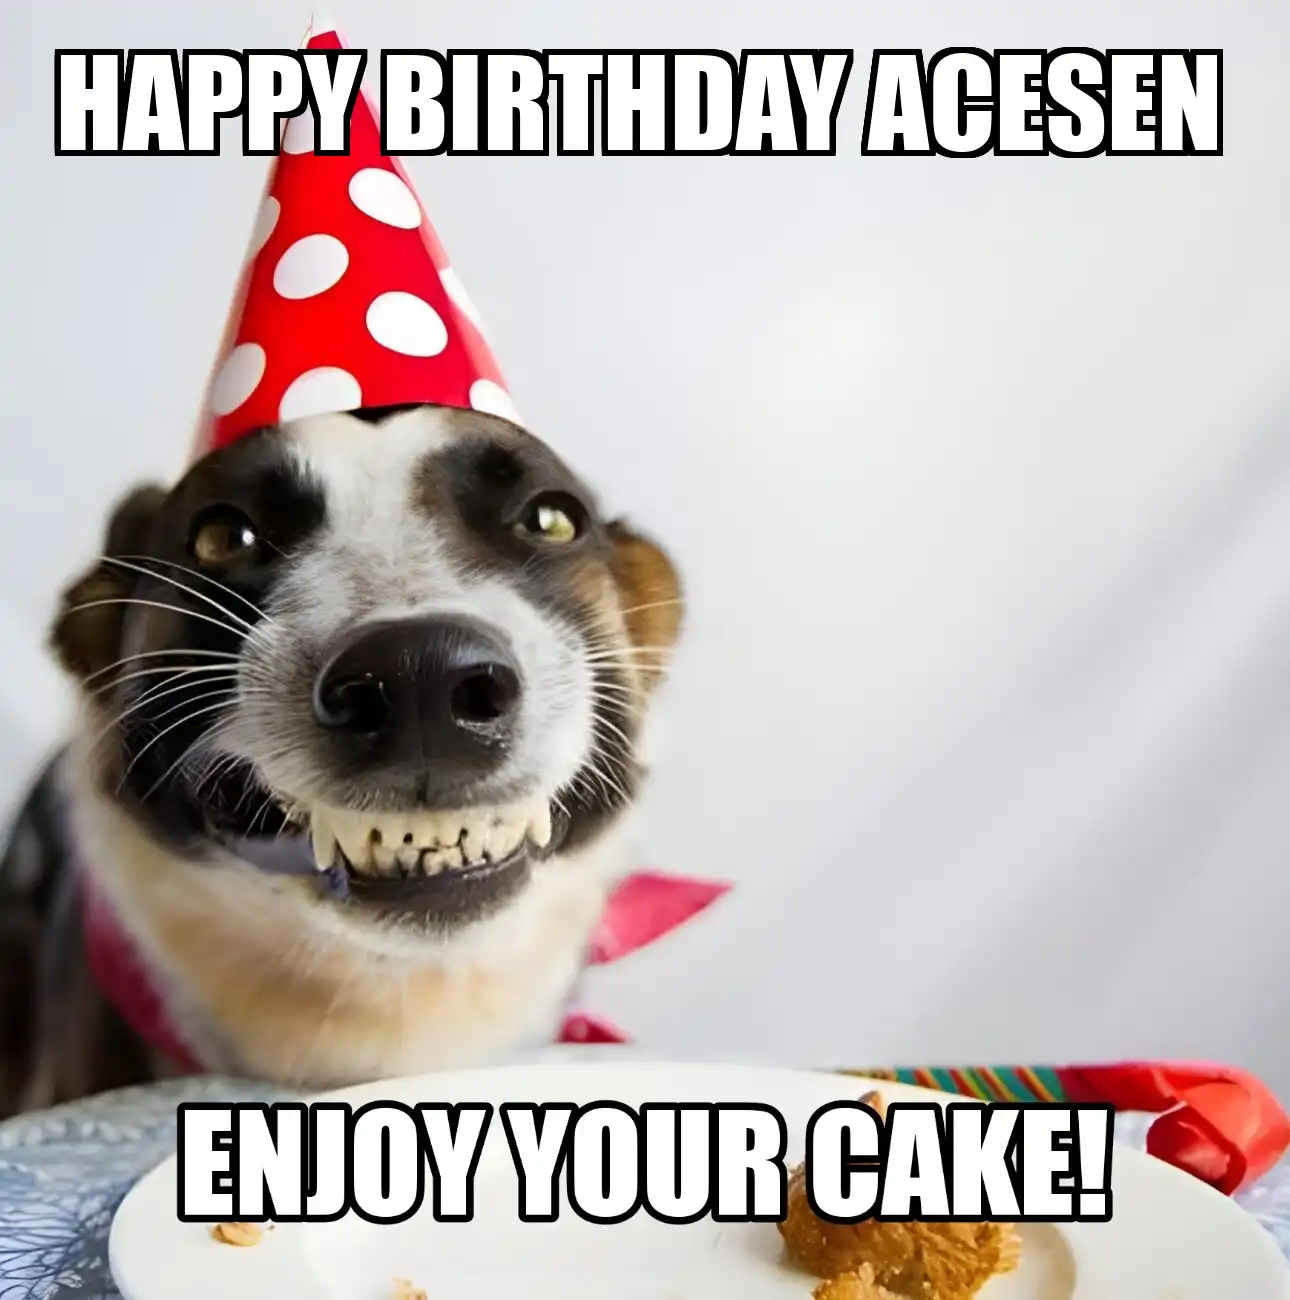 Happy Birthday Acesen Enjoy Your Cake Dog Meme